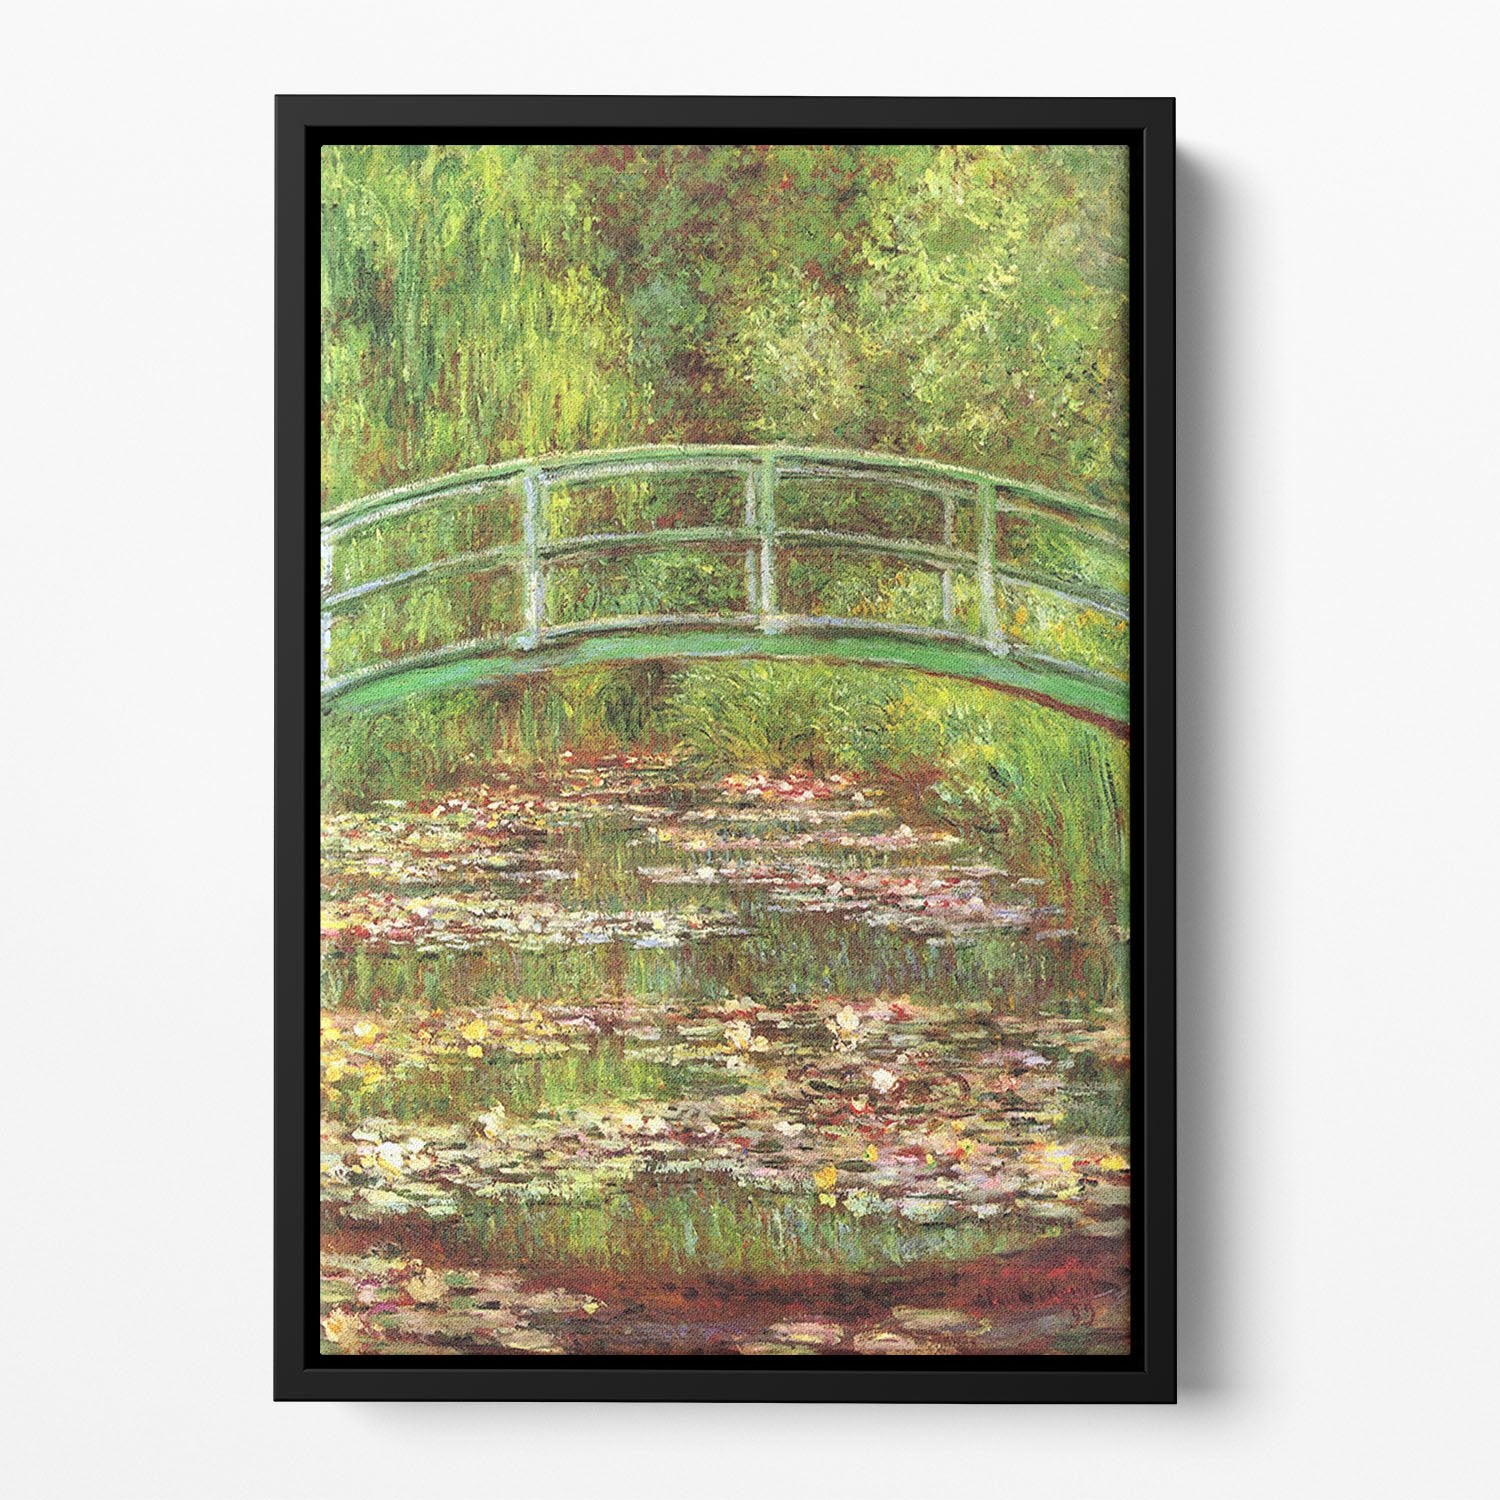 Bridge over the sea rose pond by Monet Floating Framed Canvas